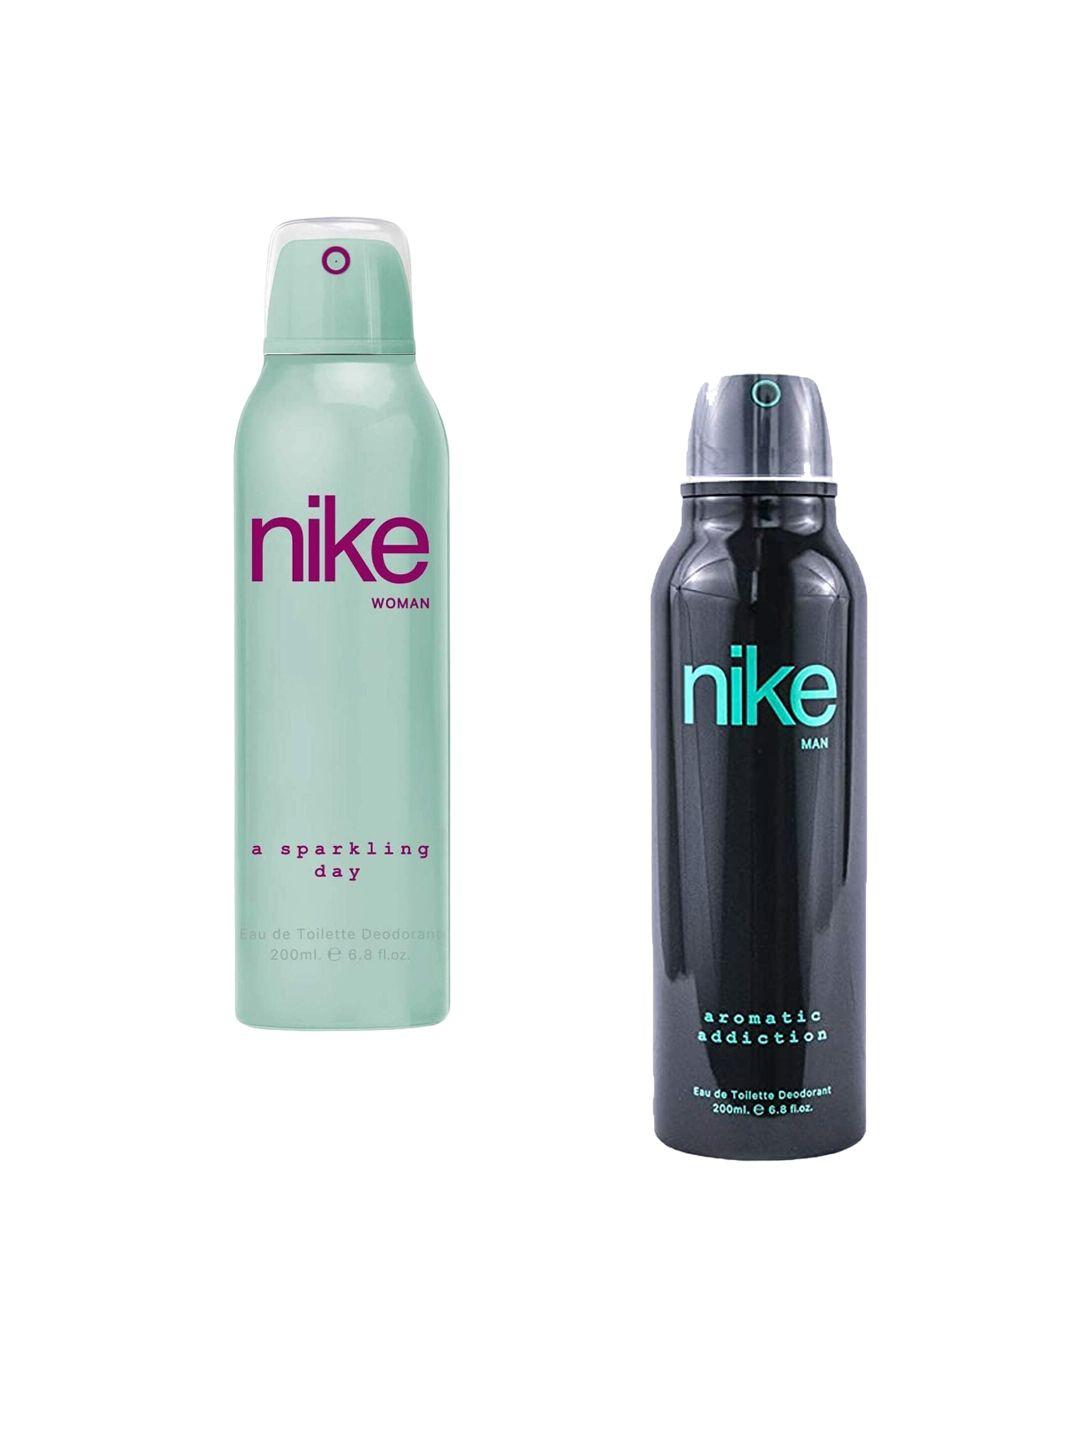 nike-set-of-2-edt-deodorant---men-aromatic-addiction-&-women-a-sparkling-day---200ml-each